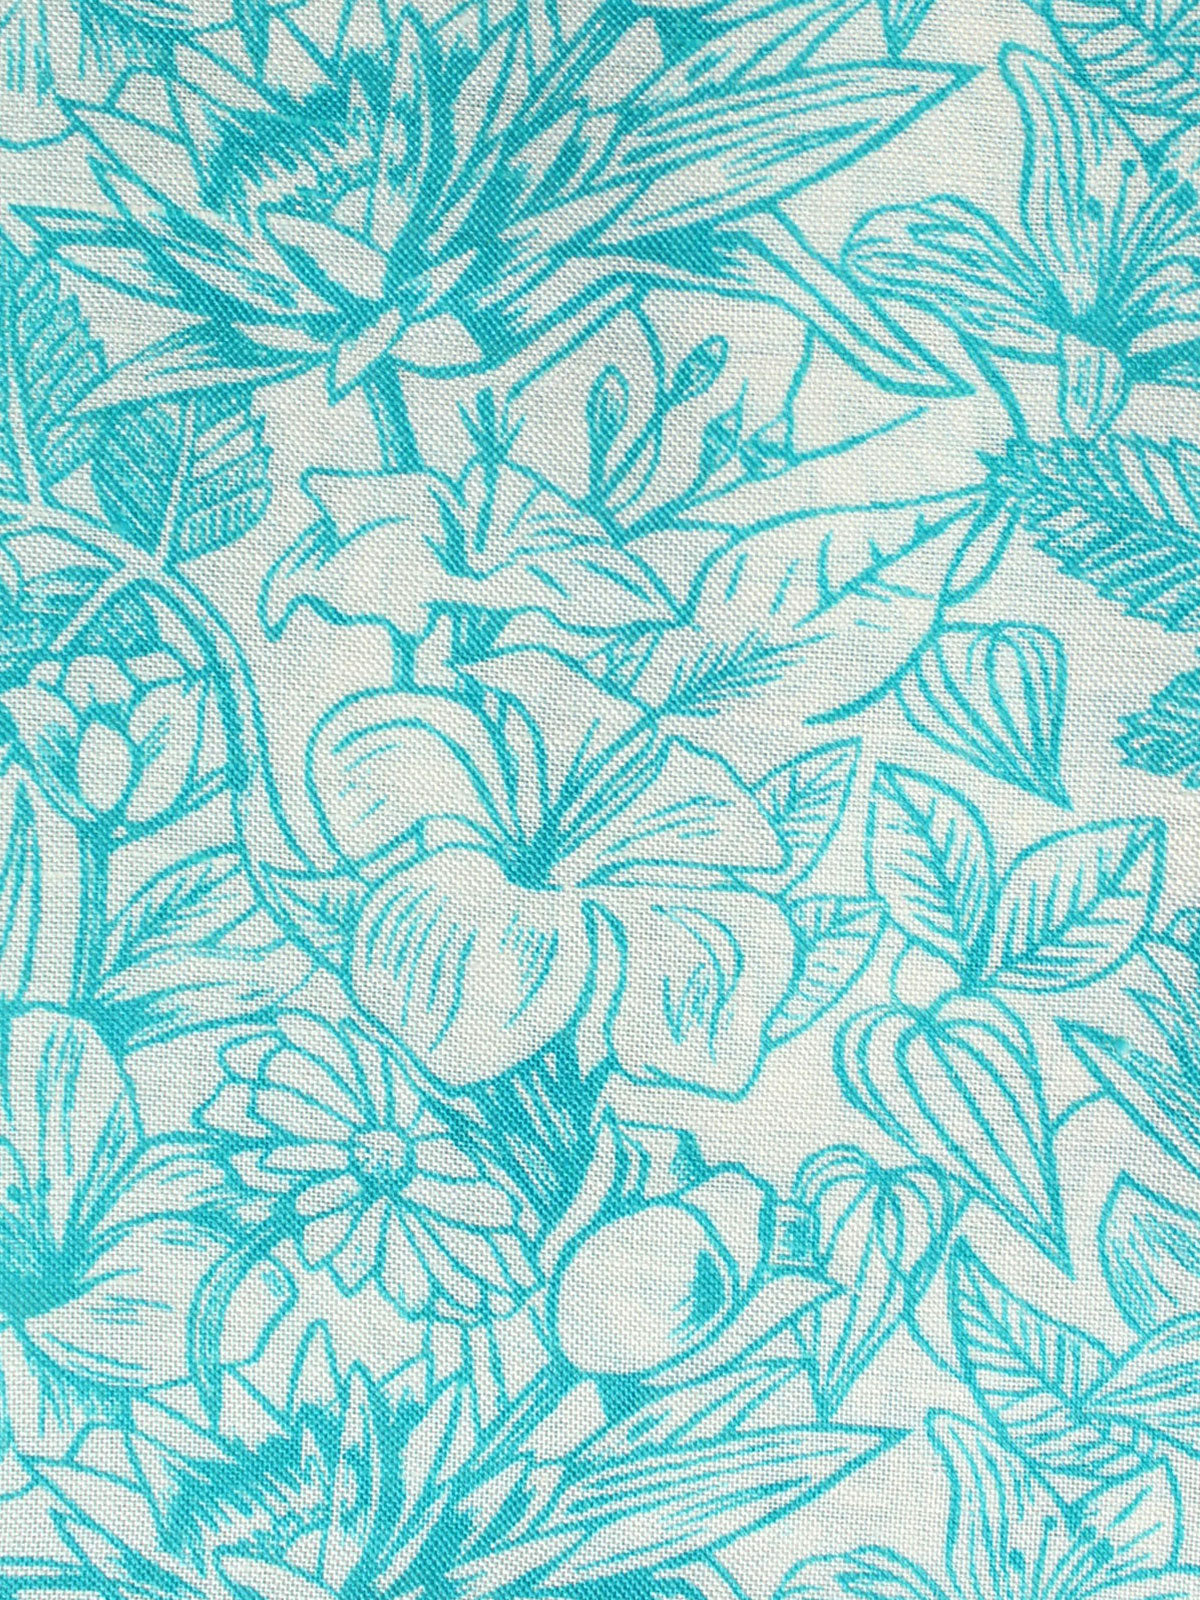 Kiton Scarf Aqua Floral Design Silk